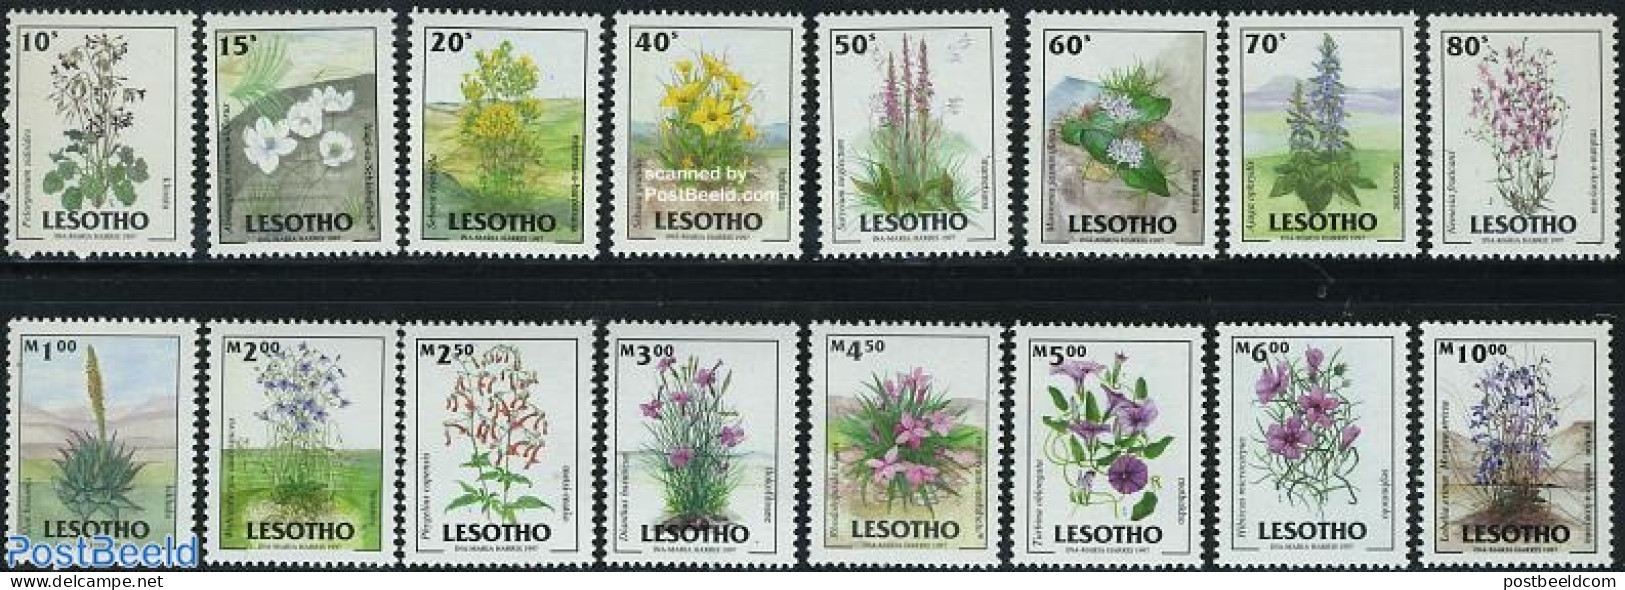 Lesotho 1998 Definitives, Flowers 16v, Mint NH, Nature - Flowers & Plants - Lesotho (1966-...)